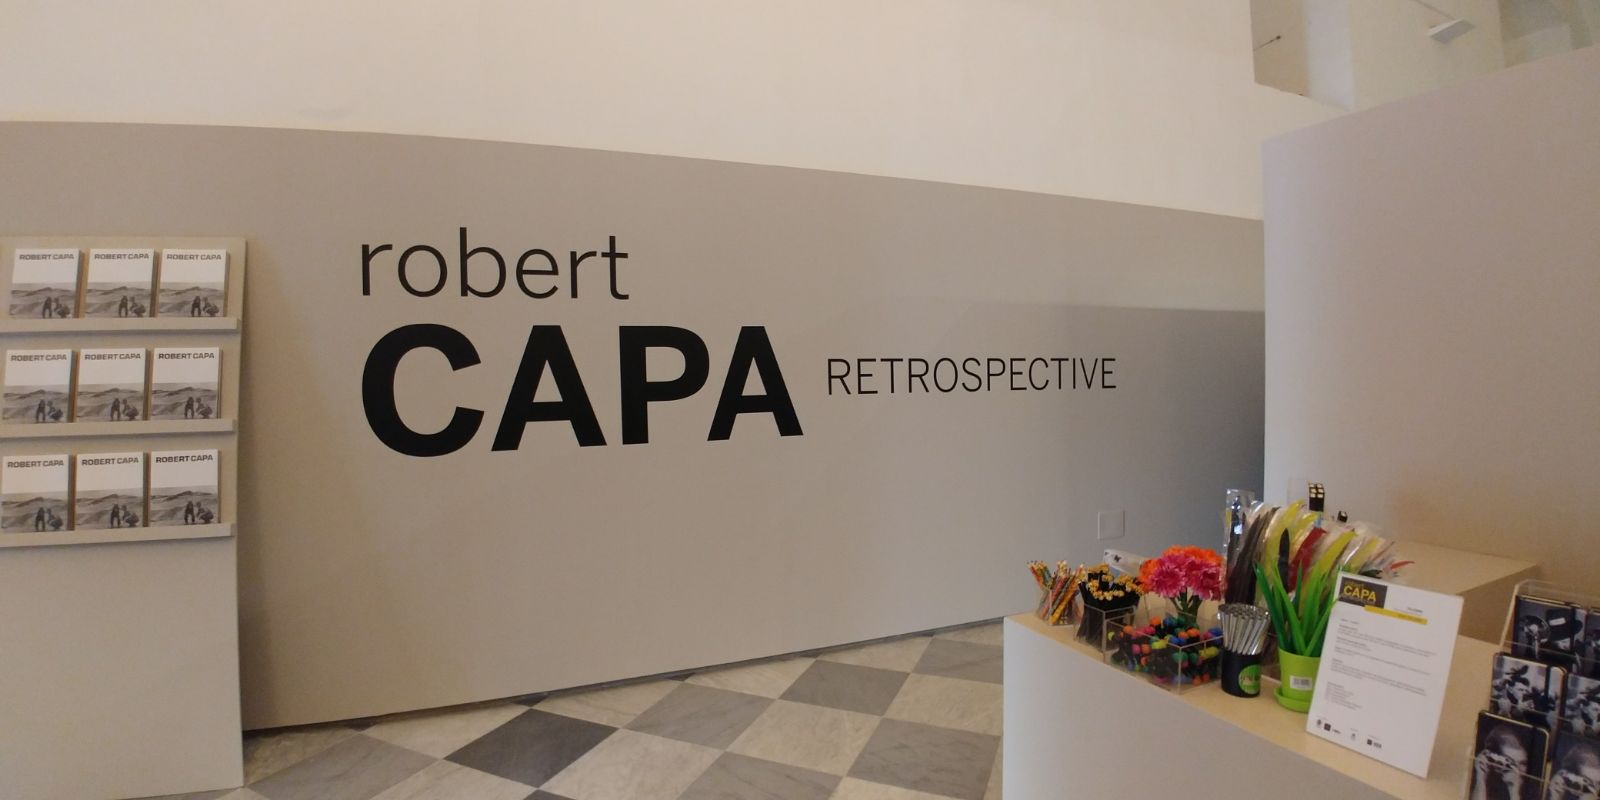 Robert Capa Retrospective